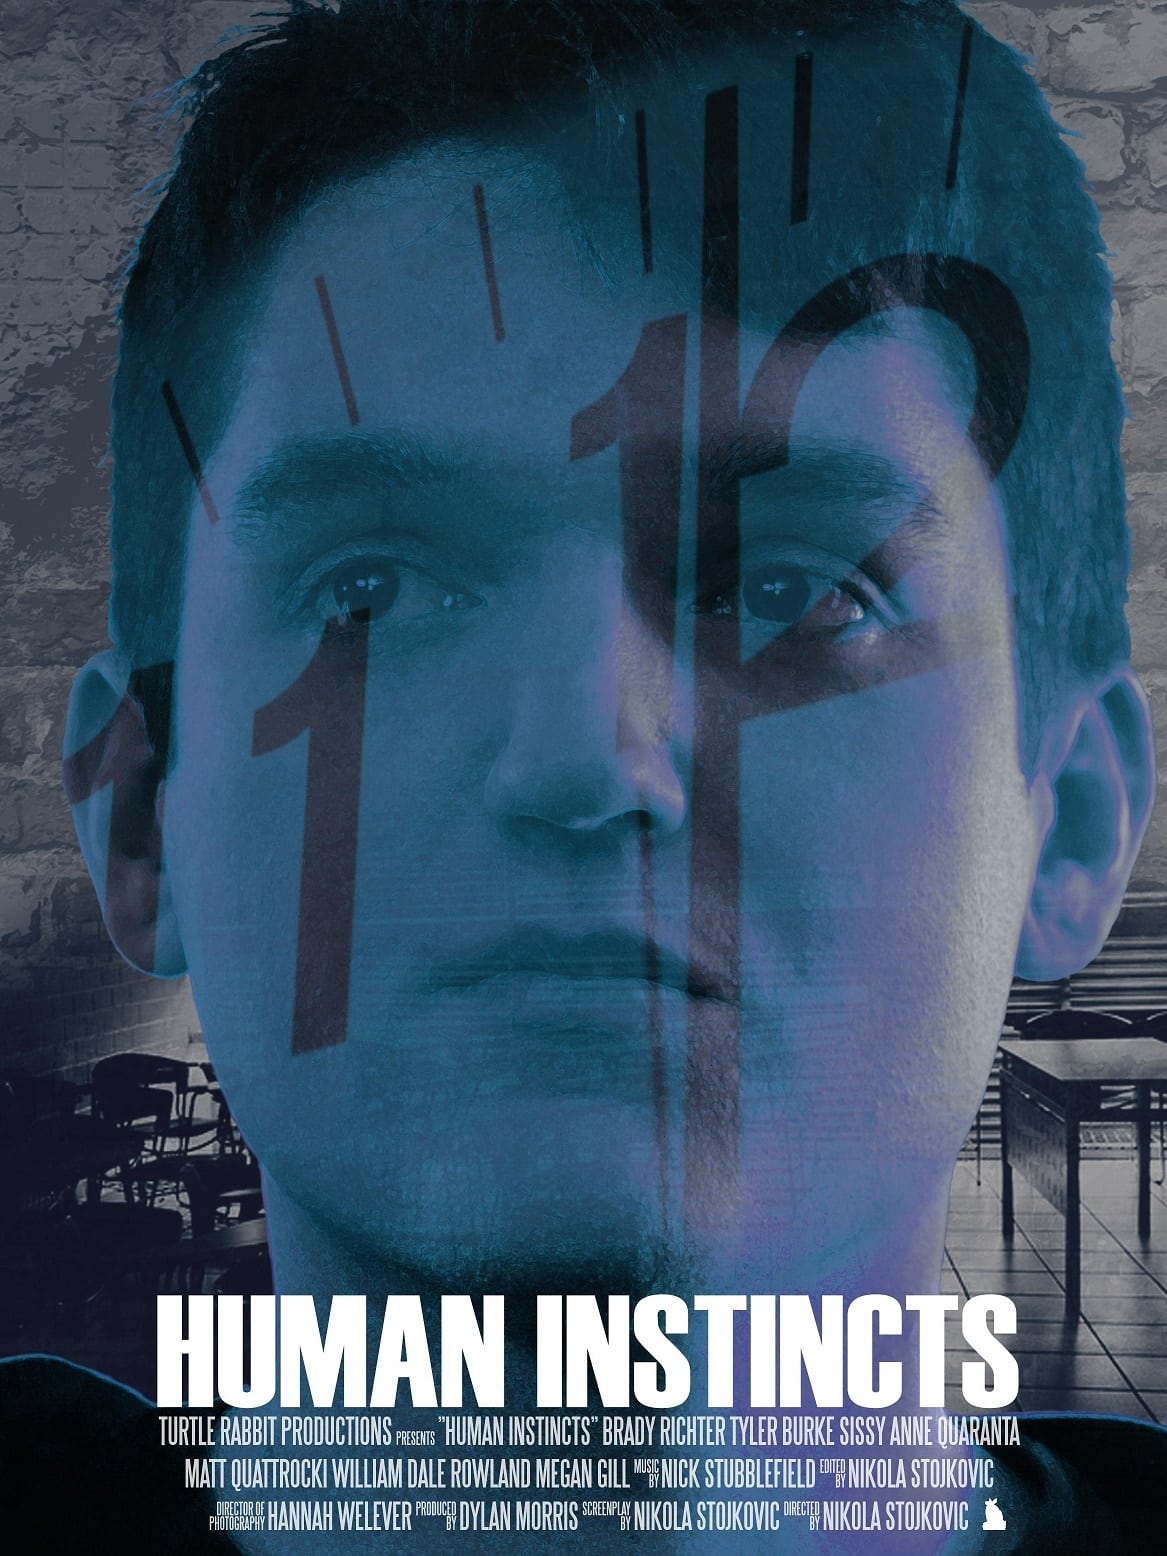 Human Instincts